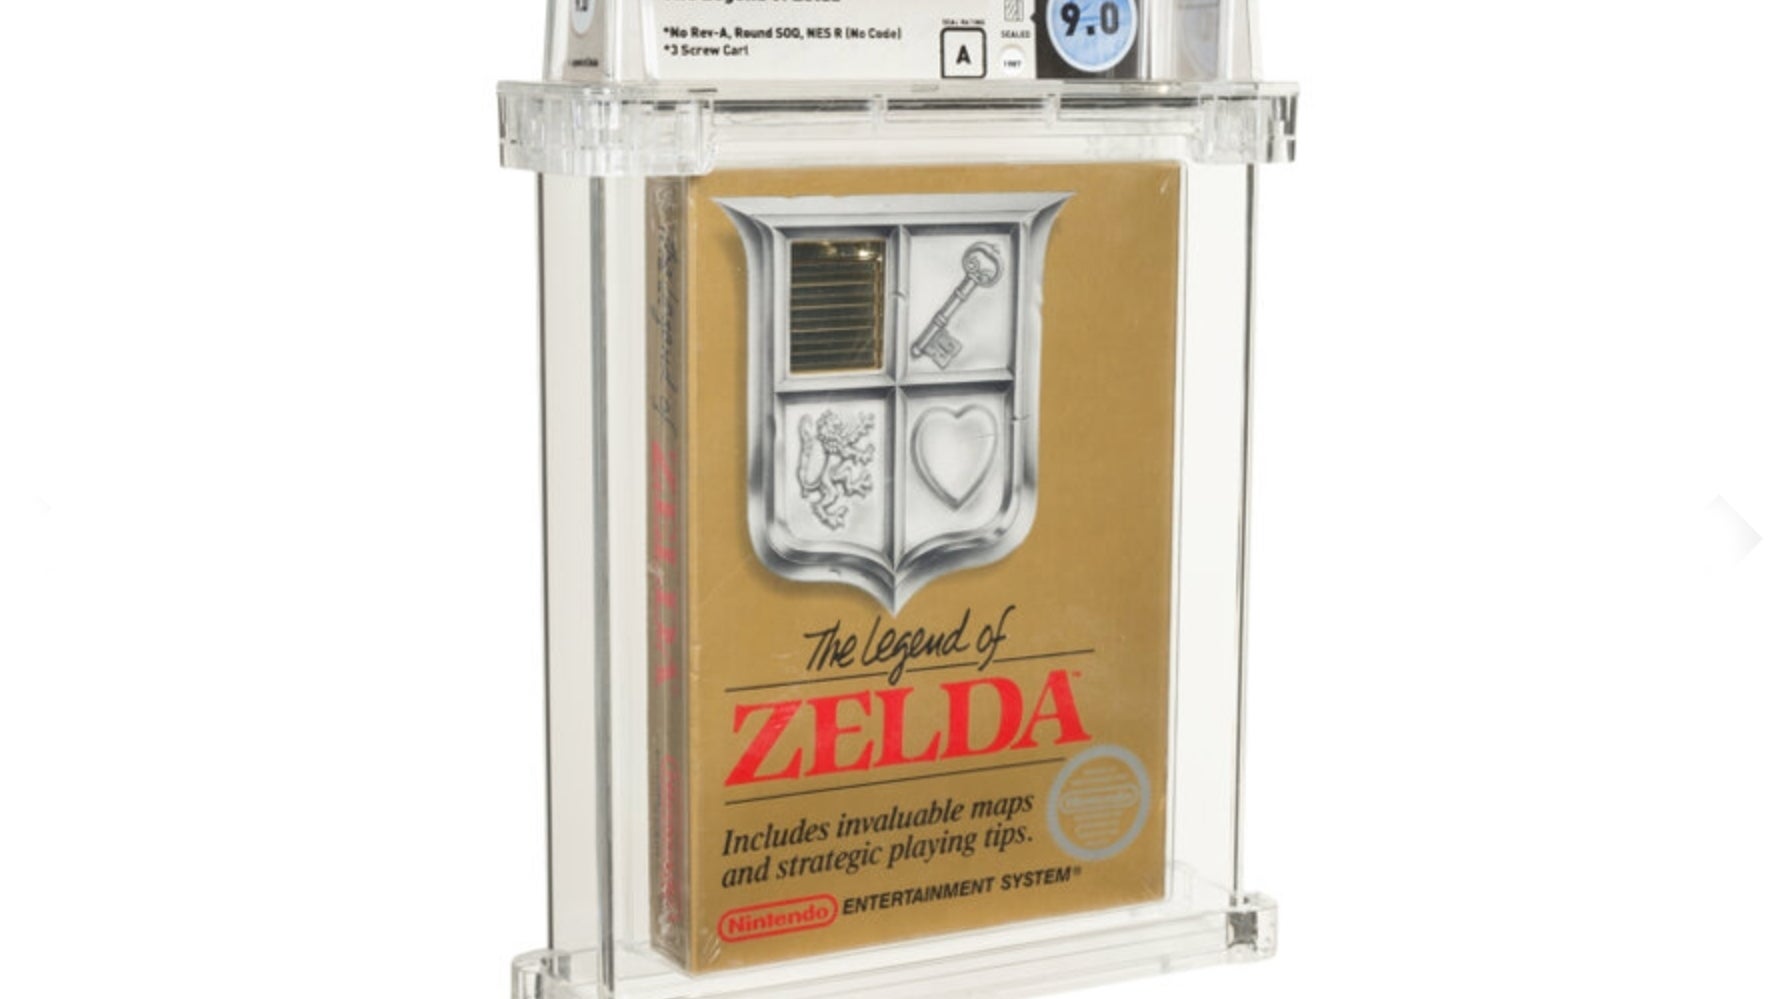 Immagine di The Legend of Zelda in una rarissima copia NES che è stata venduta all'asta per $870.000